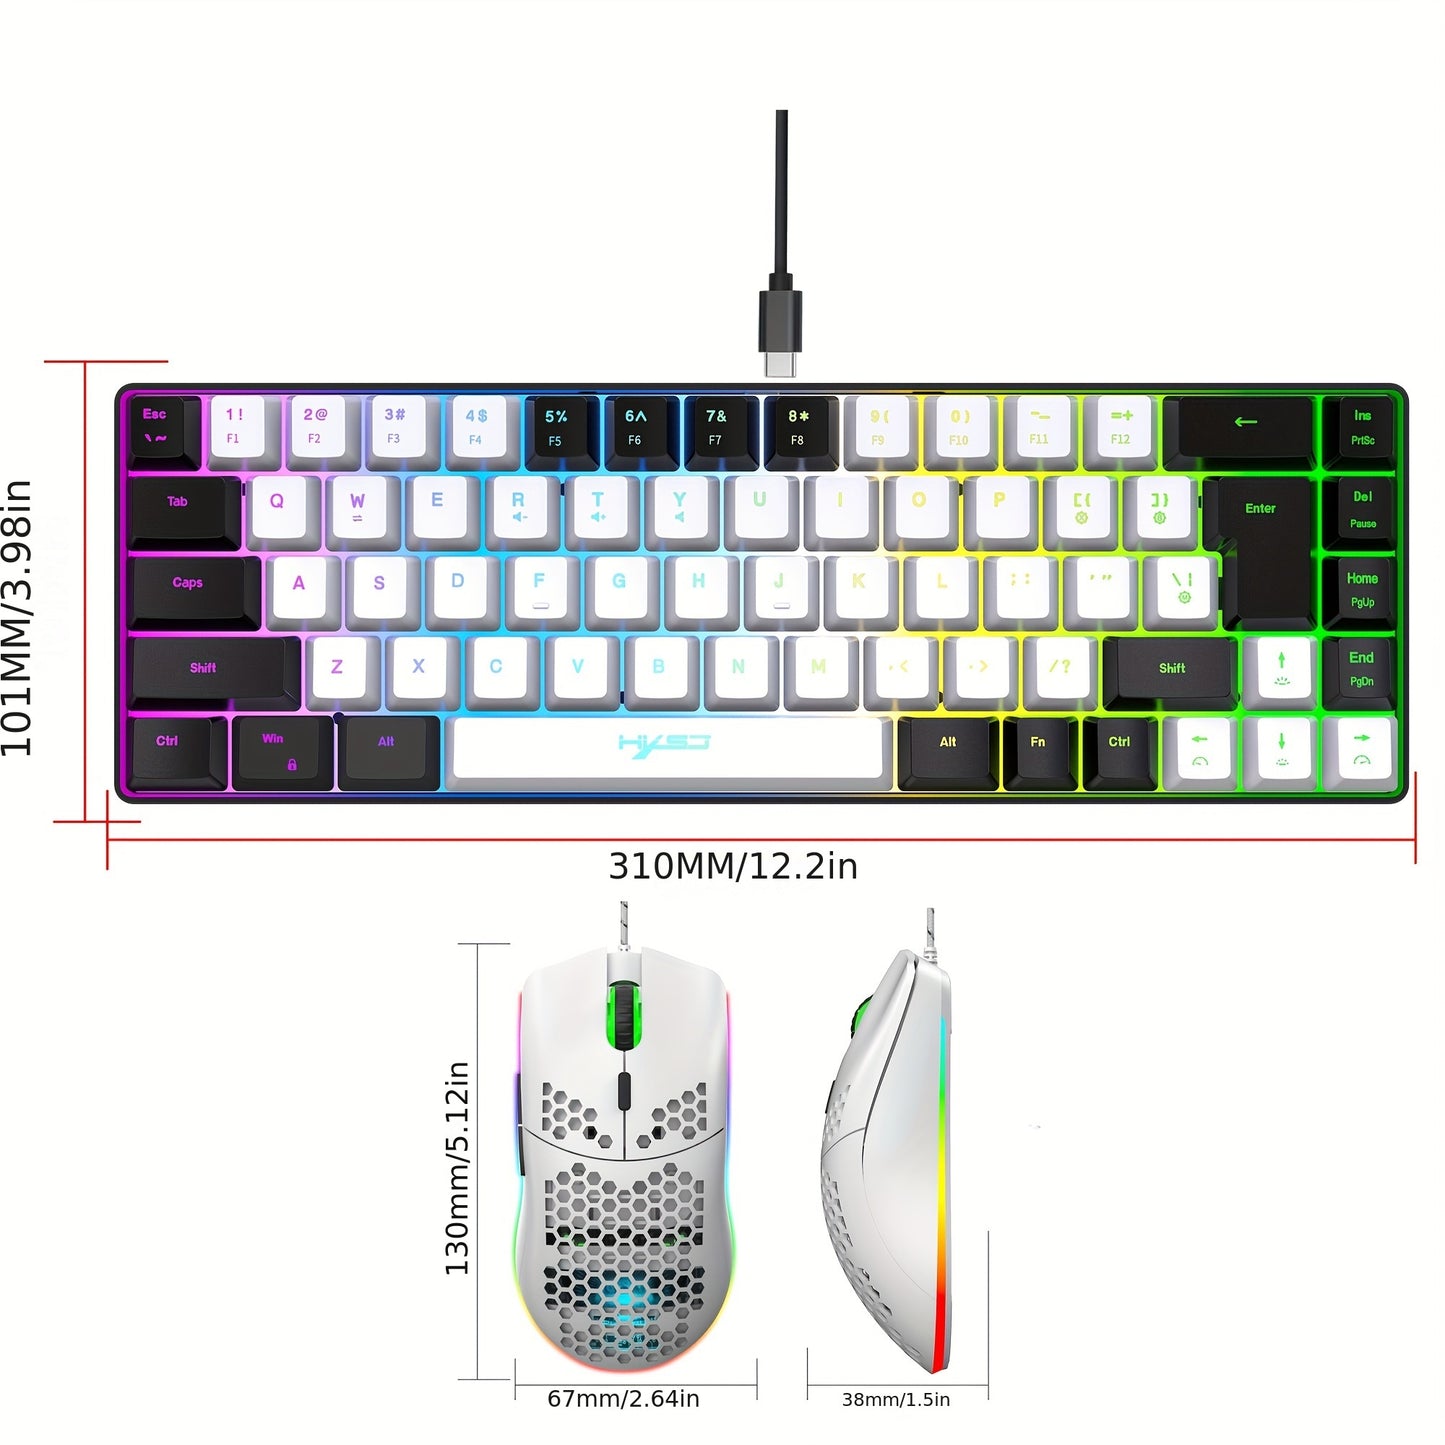 HXSJ- Black & White RGB Keyboard And Cellular Gaming Mouse, Compact 68-key Mini Wired Keyboard RGB Backlit 1000-6400 DPI Mouse, Keyboard And Mouse Gaming PS4 Xbox PC Laptop Mac